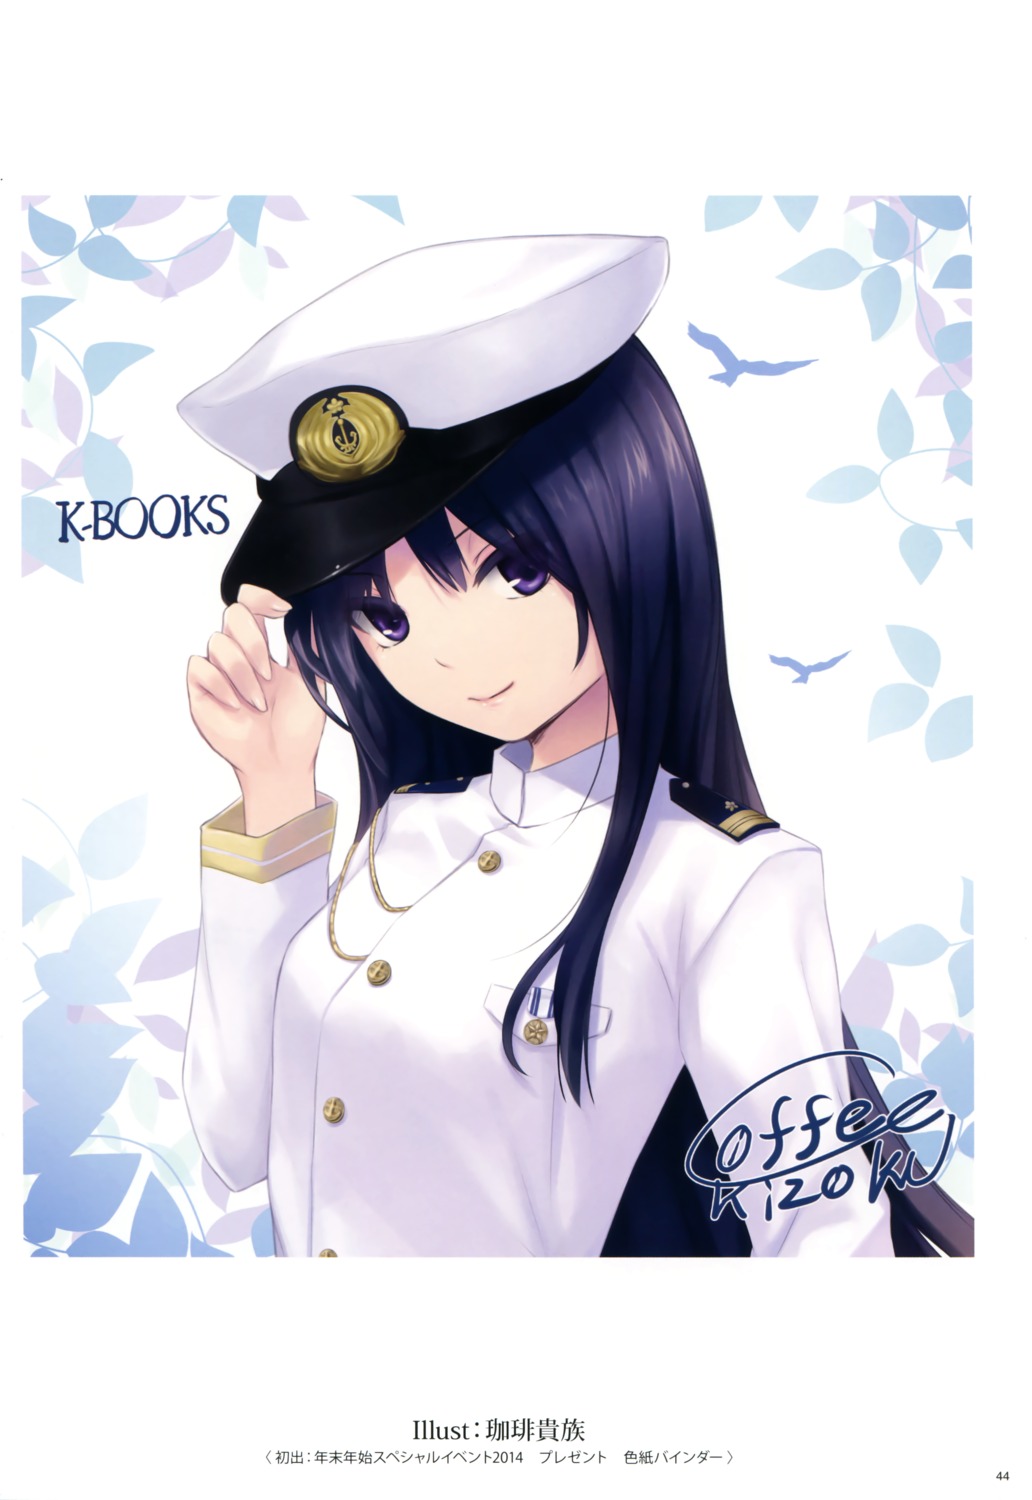 autographed coffee-kizoku k-books uniform